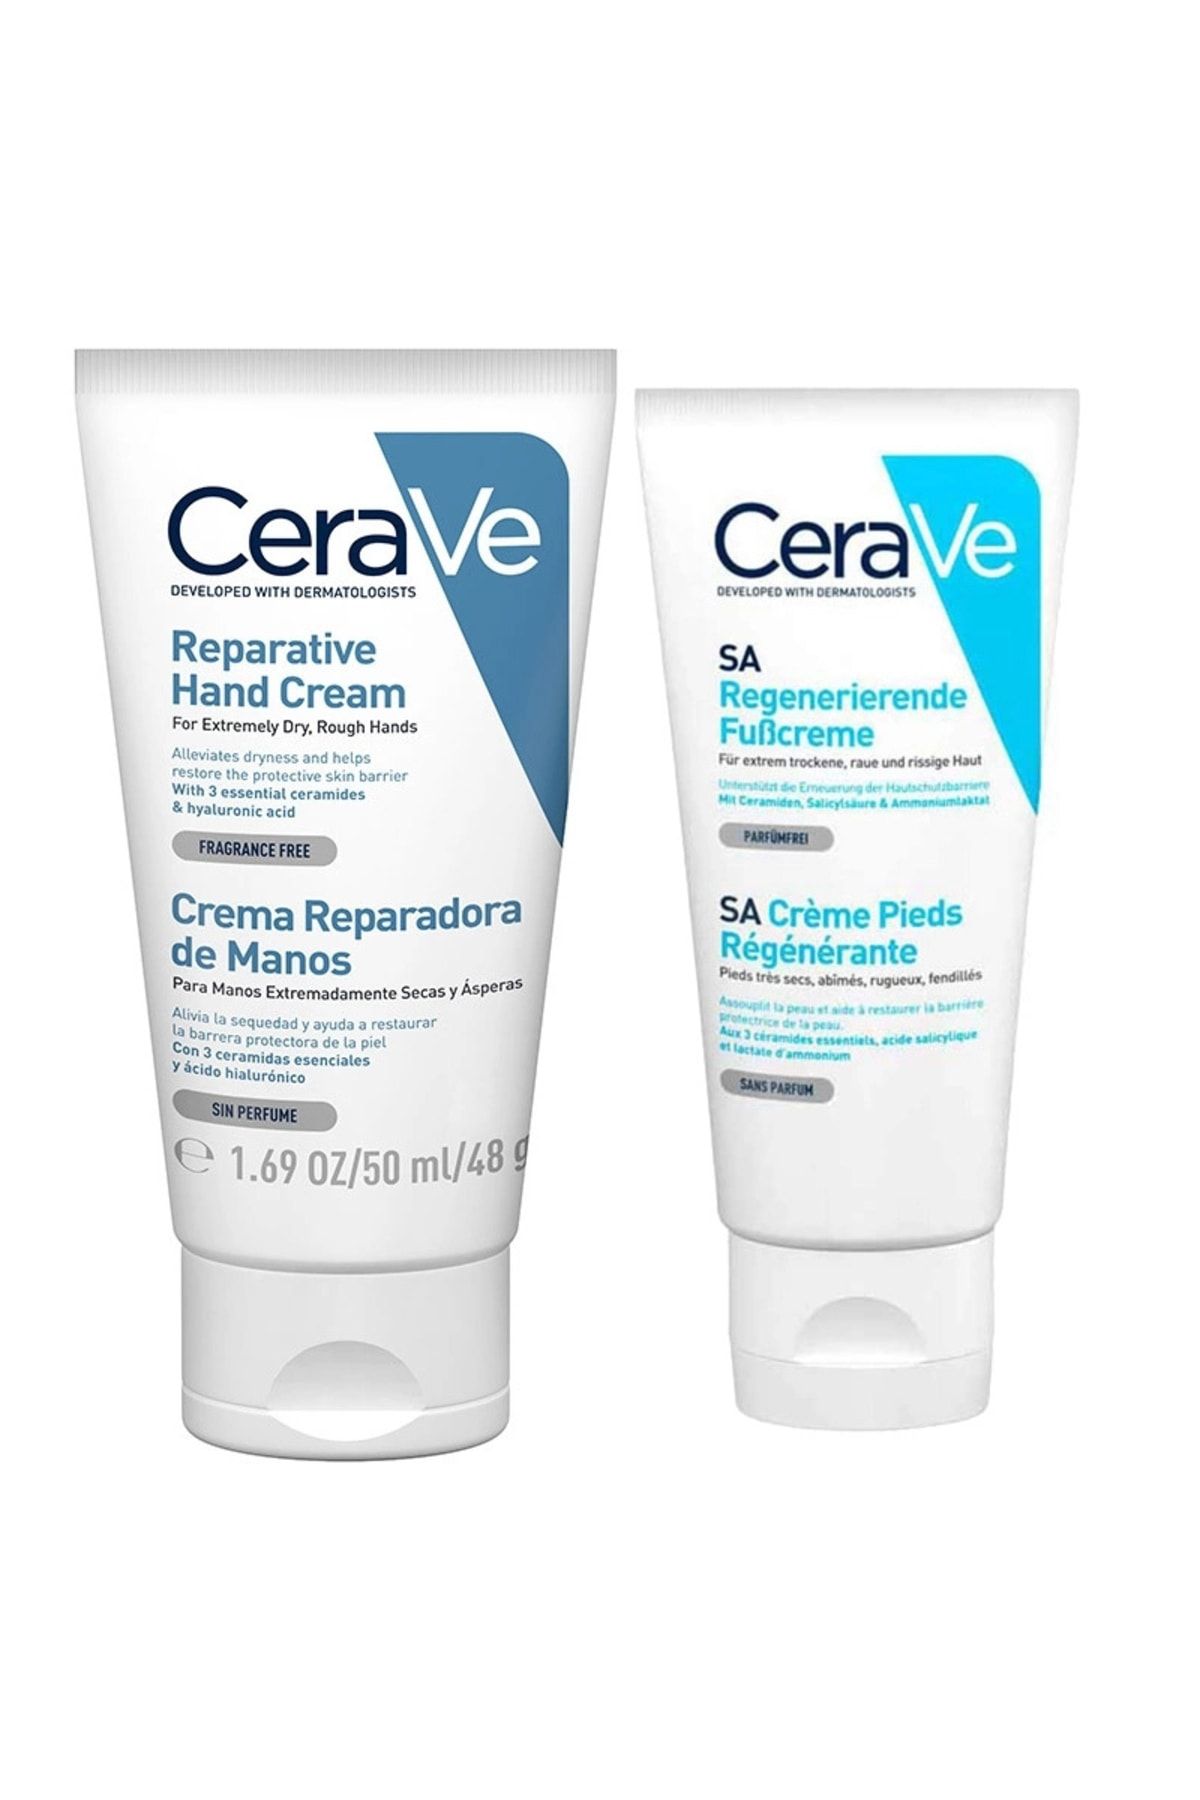 CeraVe بسته نگهداری زمستانی برای مراقبت از پوست